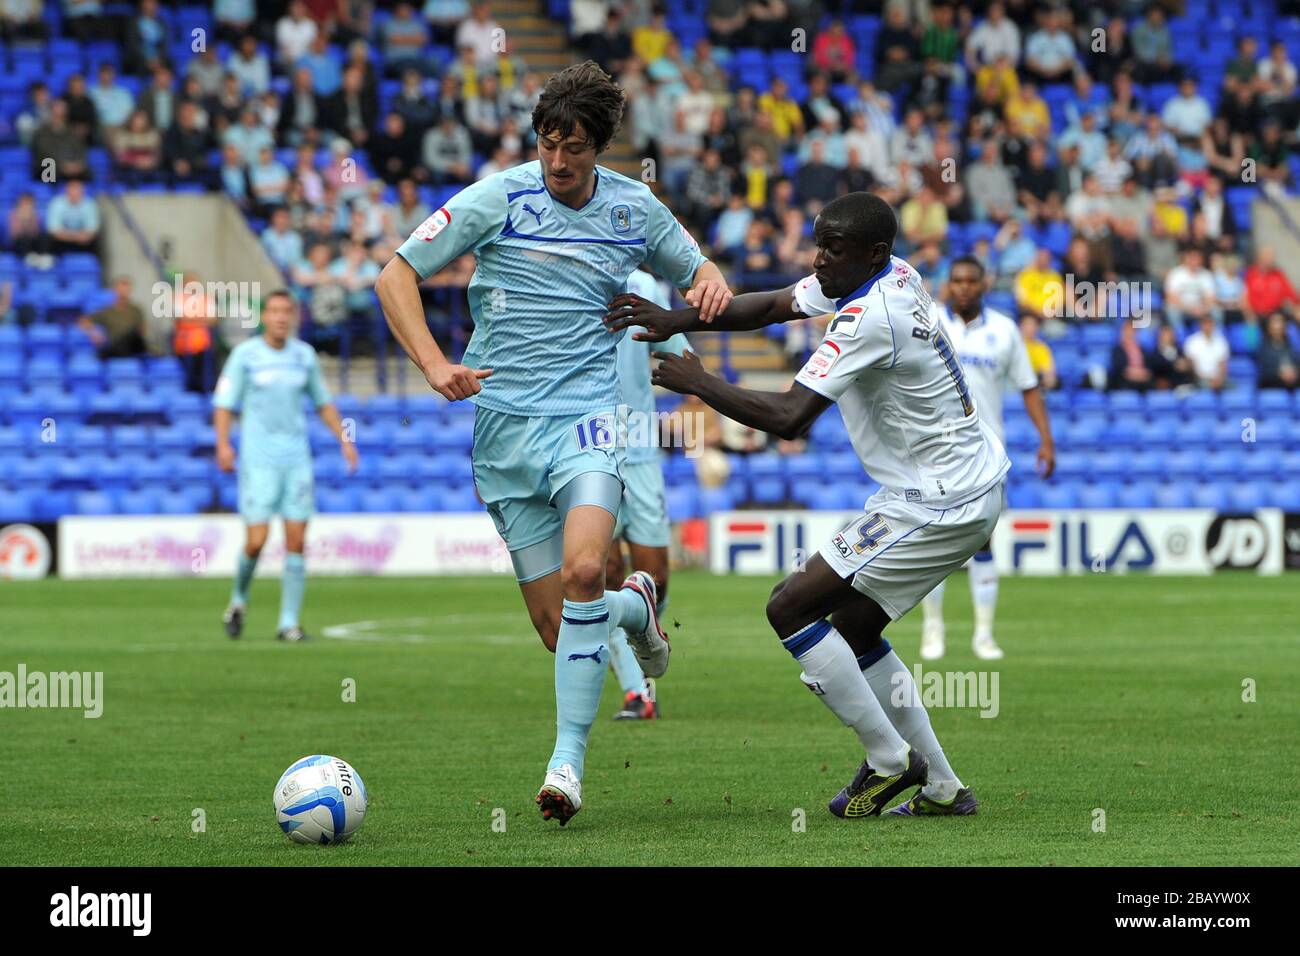 Coventry City's Adam Barton (left) and Tranmere Rovers' Zoumana Bakayogo battle for the ball. Stock Photo